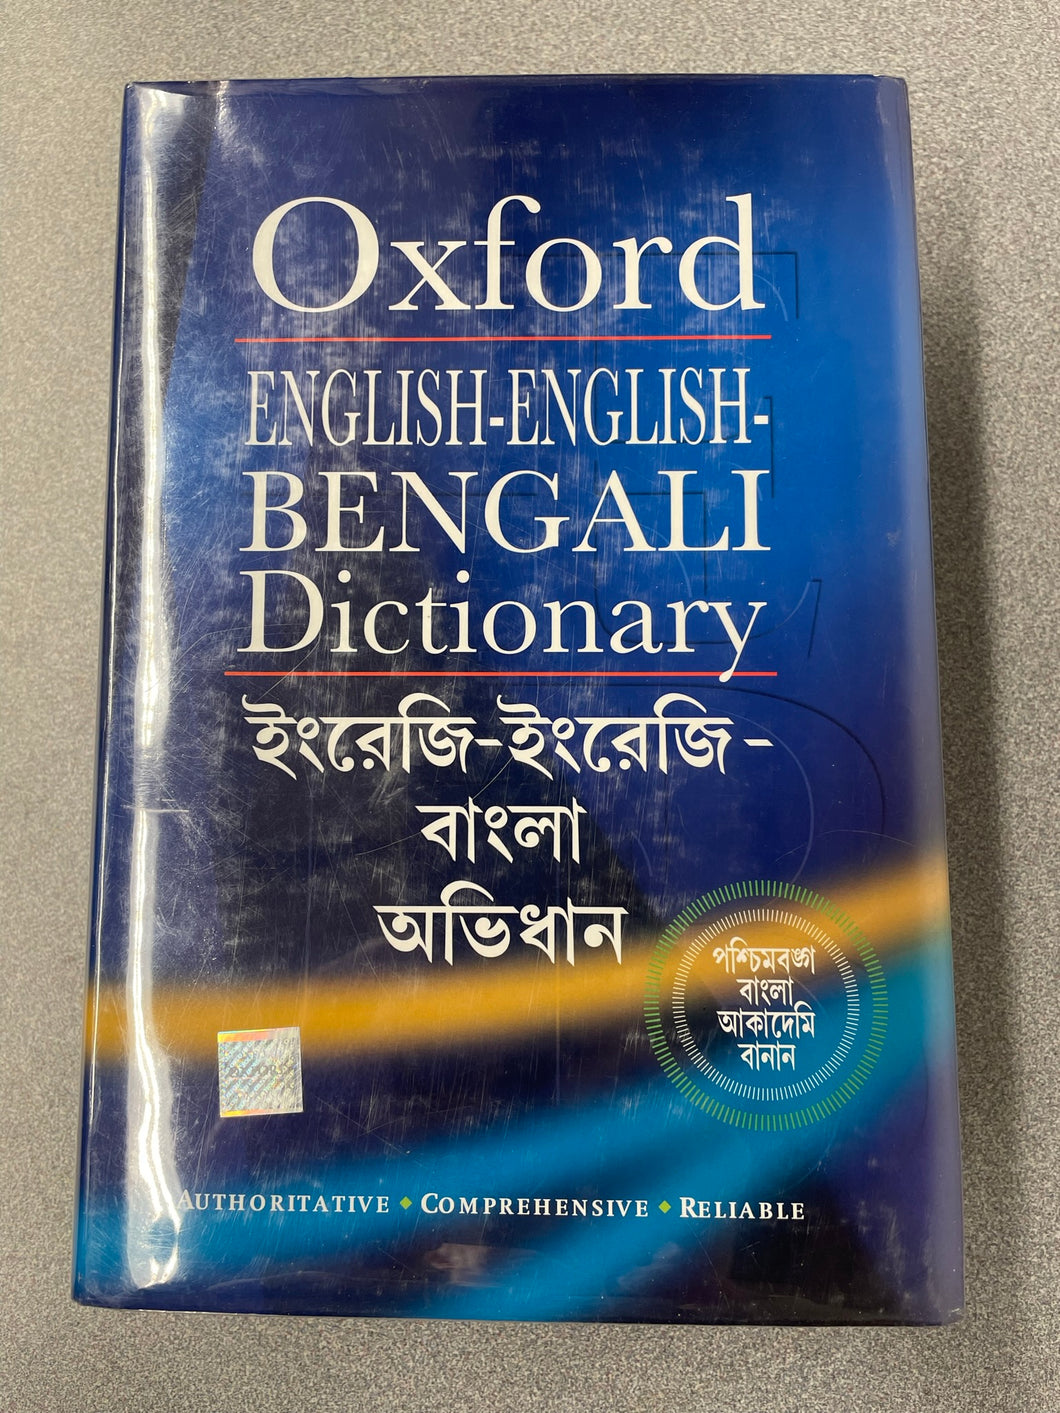 Oxford English-English-Bengali Dictionary, Mitra, Moitryee, ed. [2014] REF 6/23